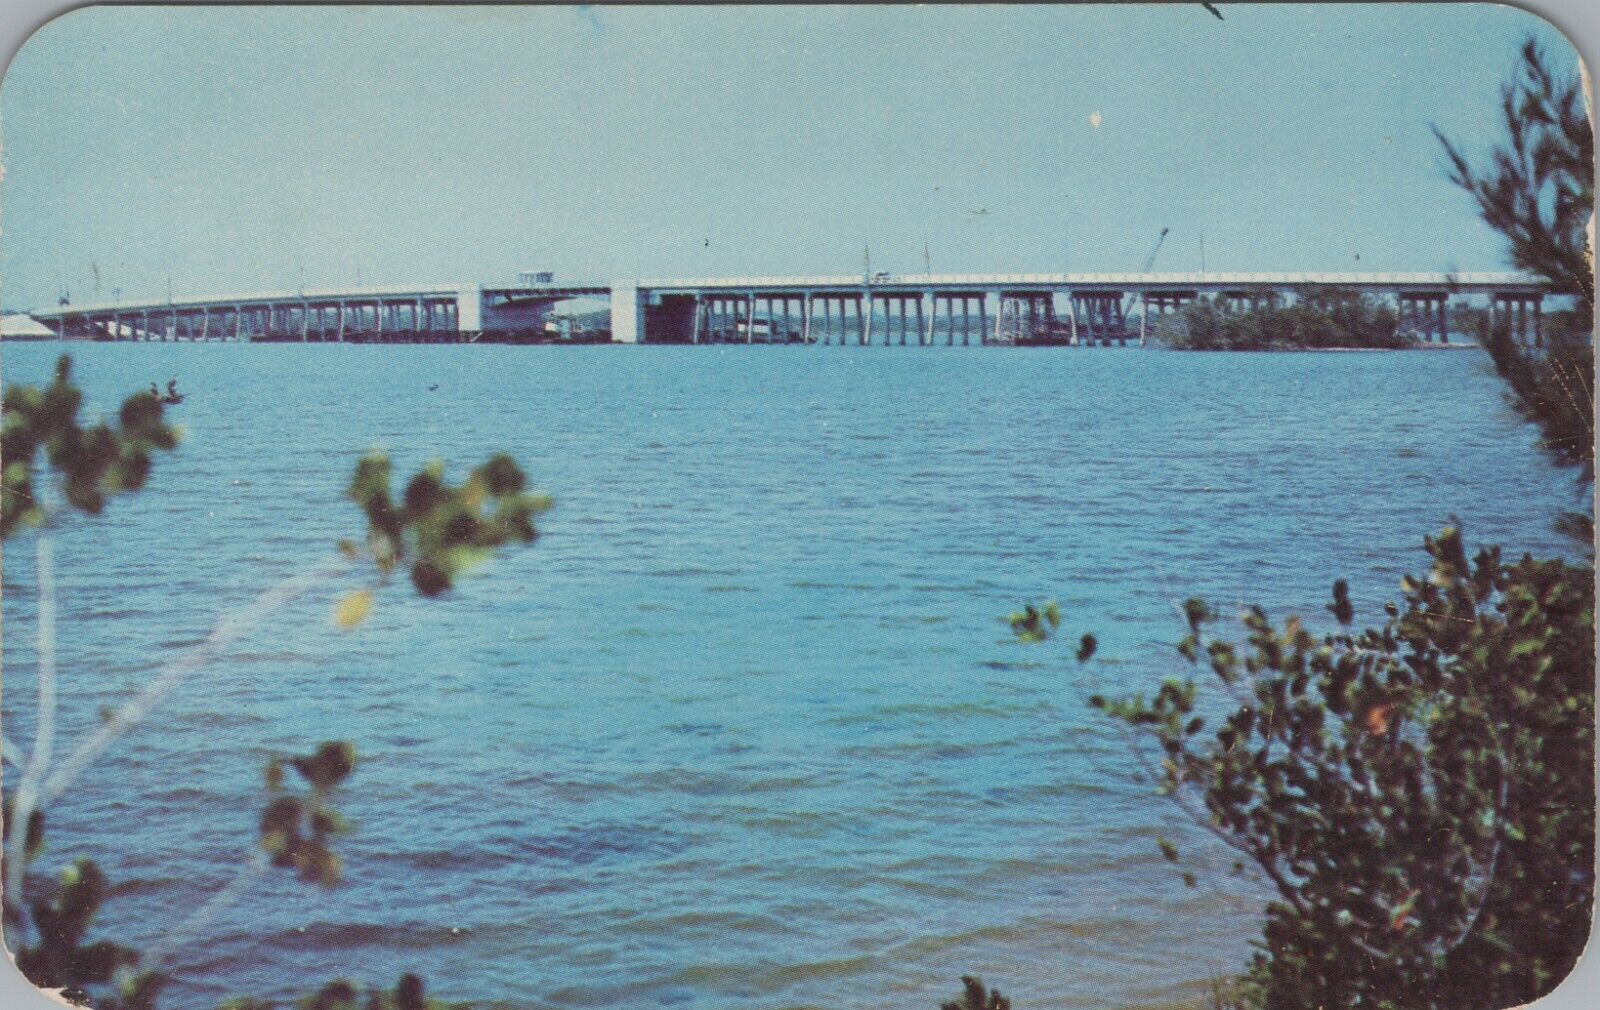 c1950s Merrill P Barber Bridge Vero Beach Florida D629